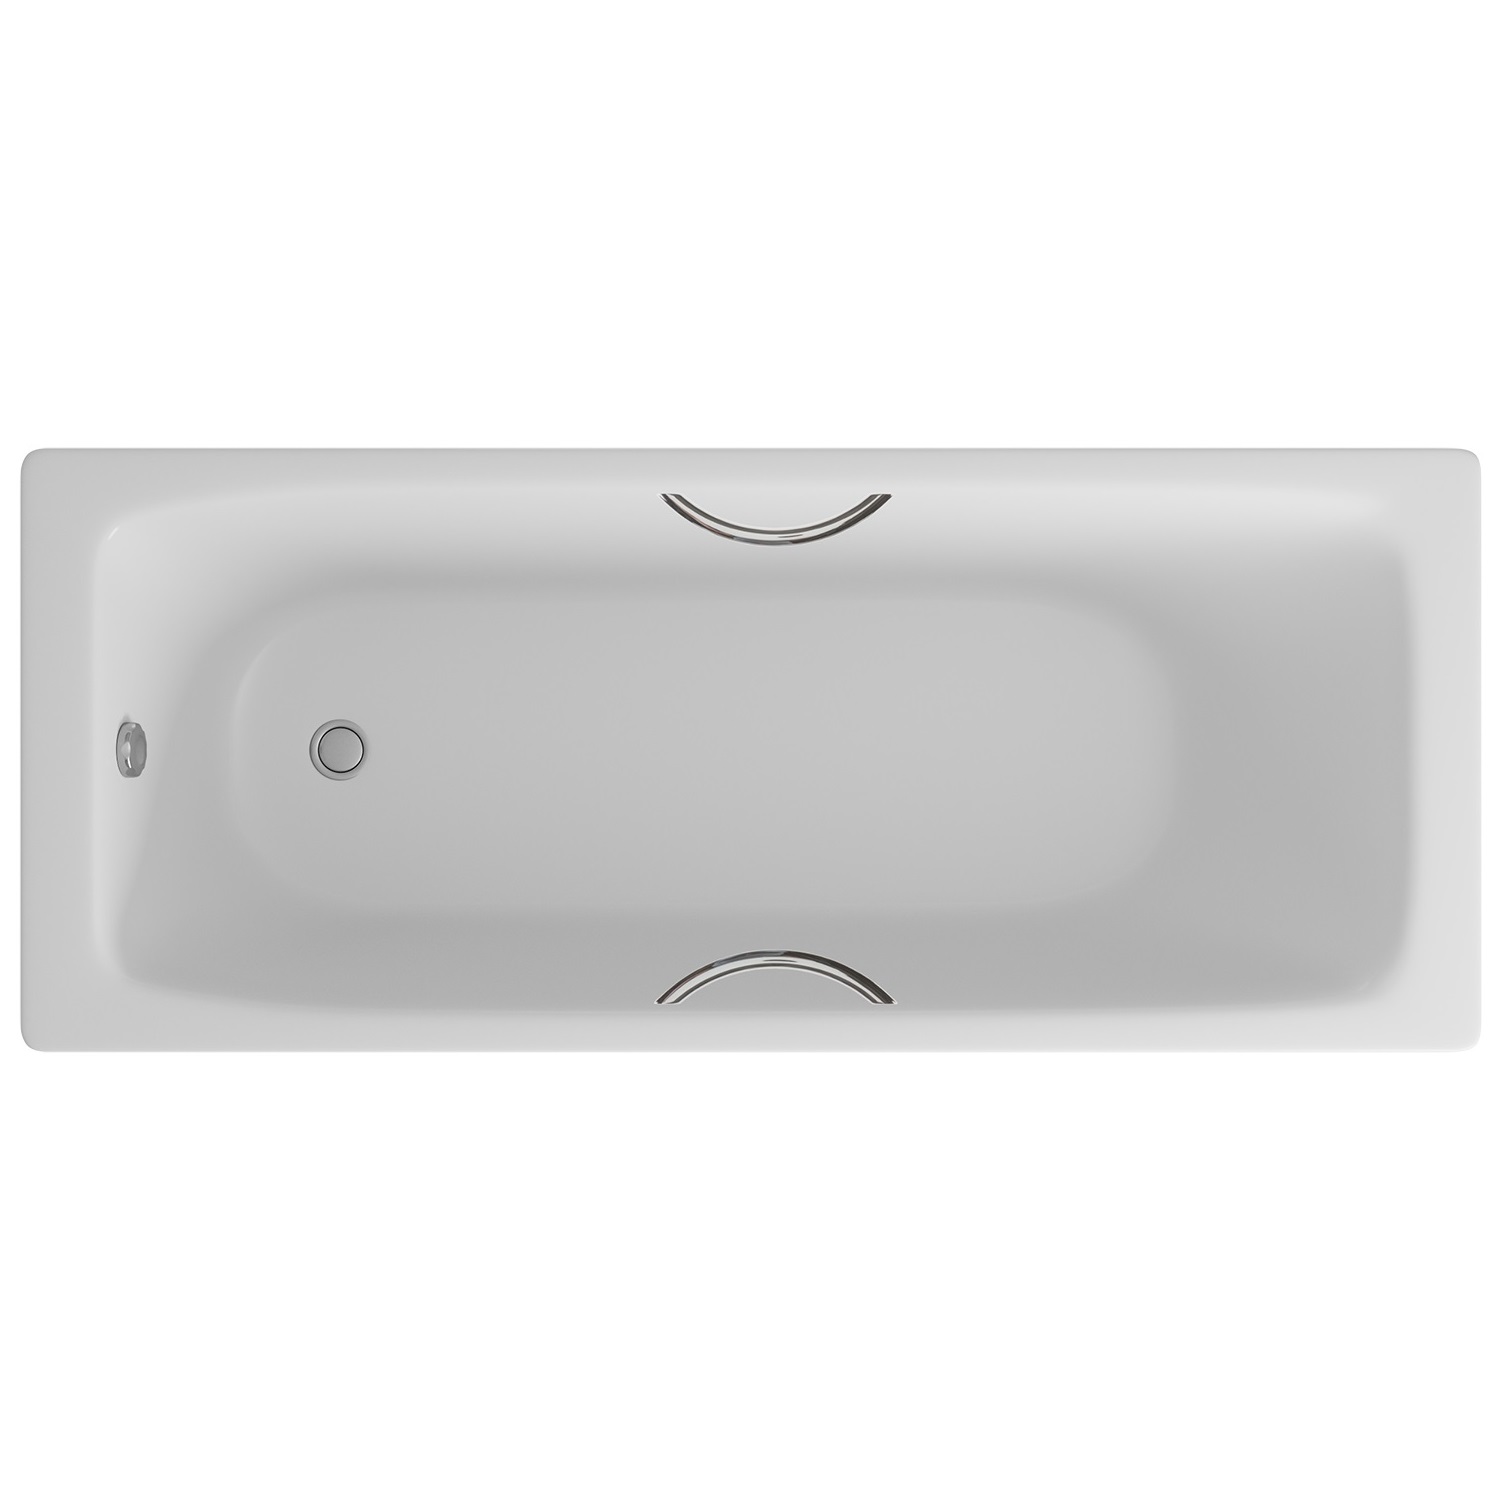 Ванна чугунная Delice Parallel DLR220504R 160х70 (белый), встраиваемая с ручками